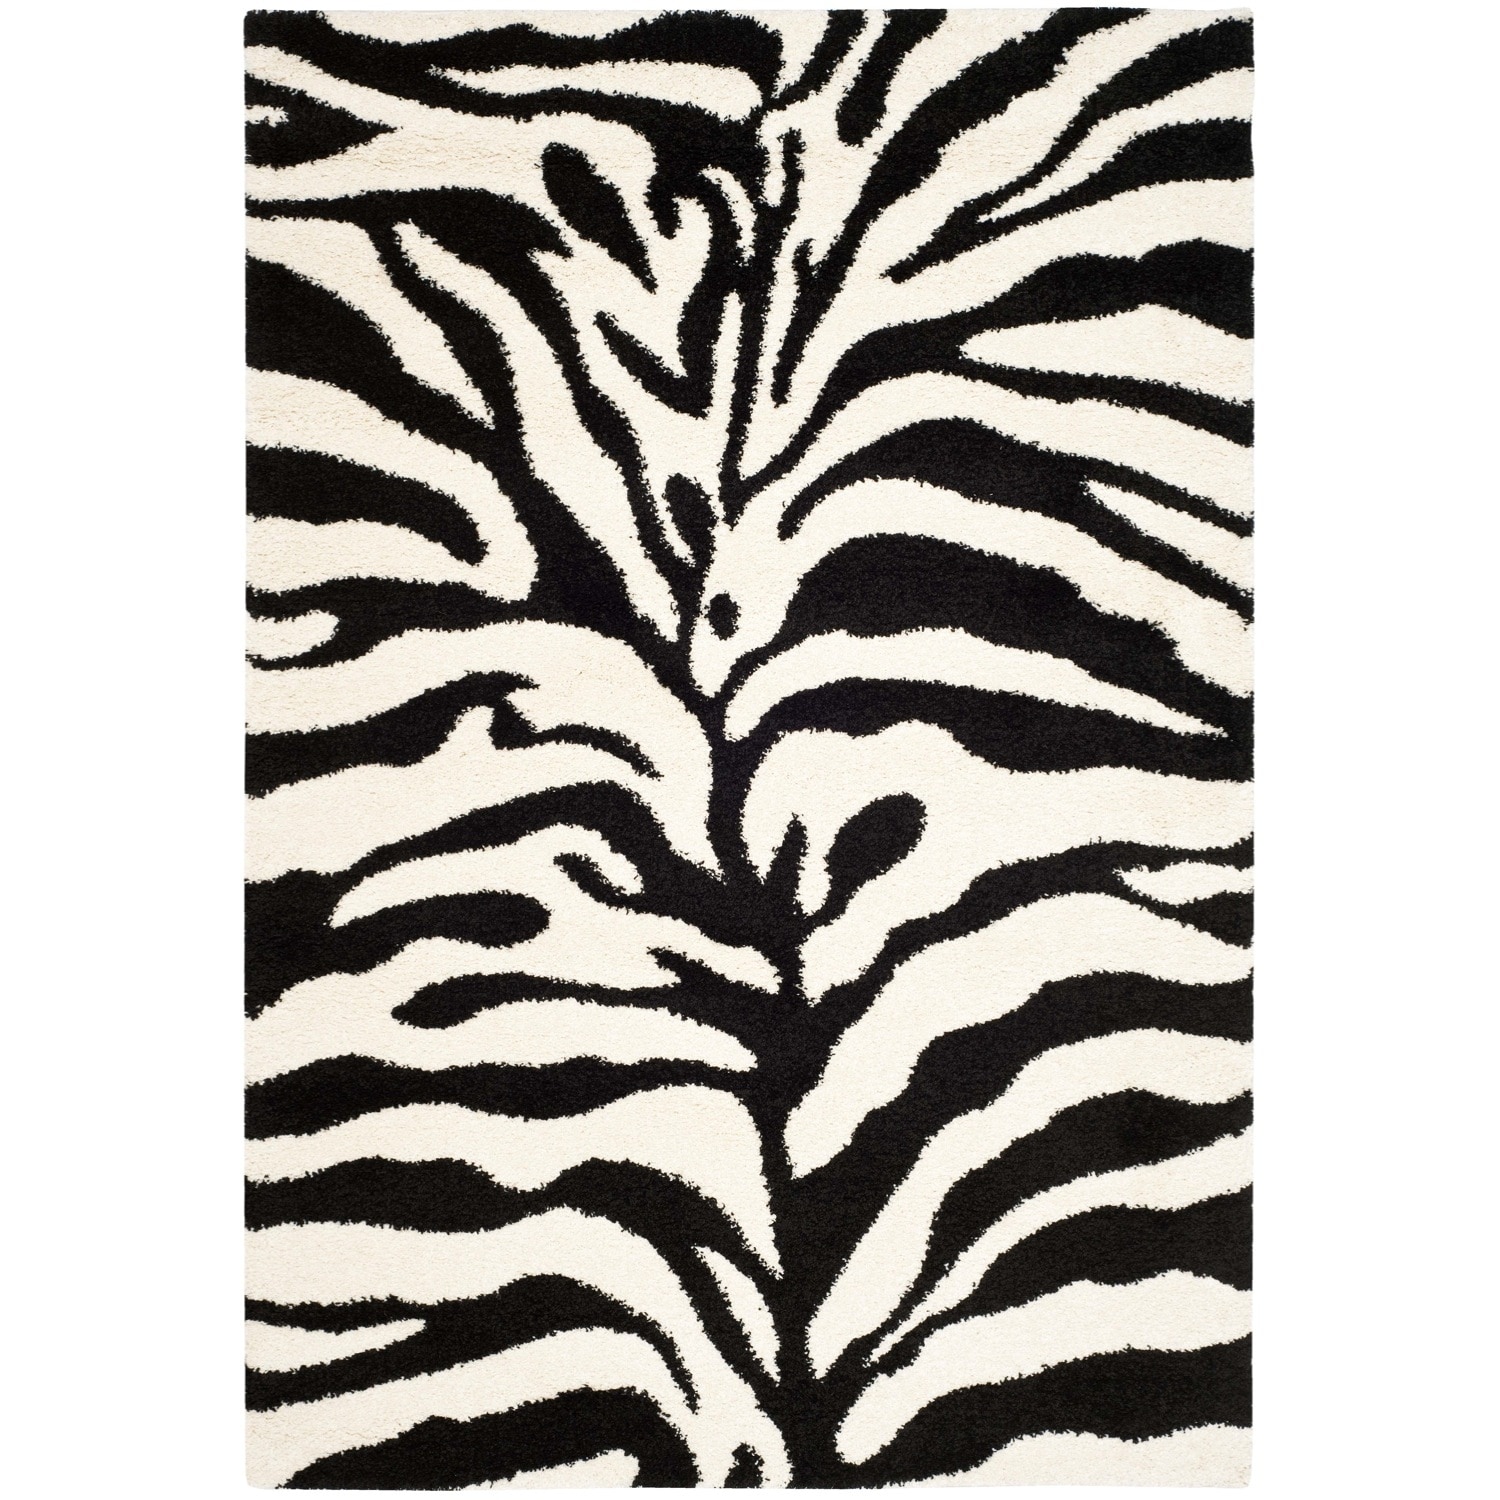 Zebra Print 1 1/2 Inch Elastic